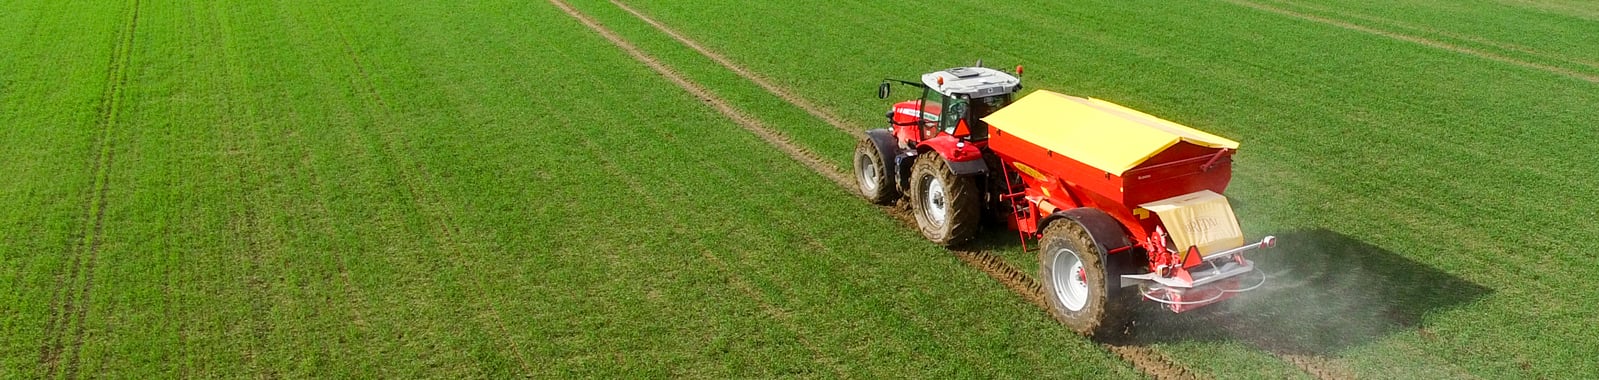 Tractor on a farmer field 